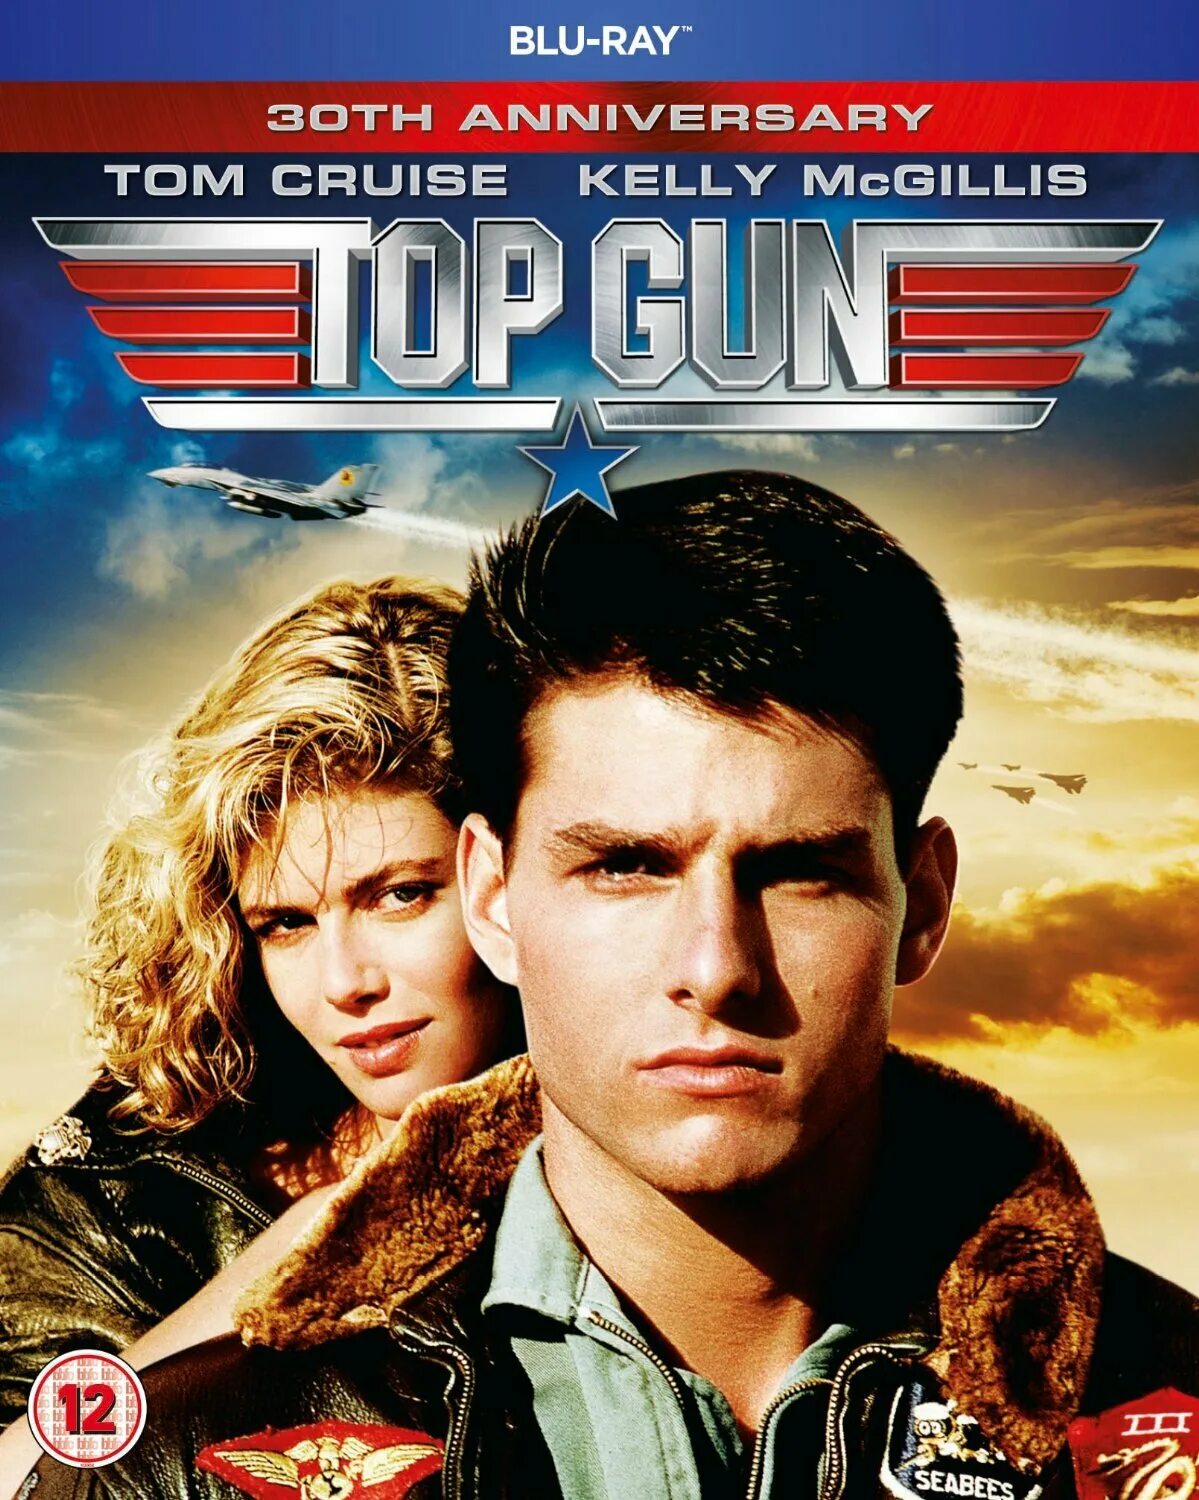 Top gun movie. Top Gun 1986 Постер. Топ Ган Мэверик 1986. Том Круз топ Ган 1986. Top Gun том Круз.